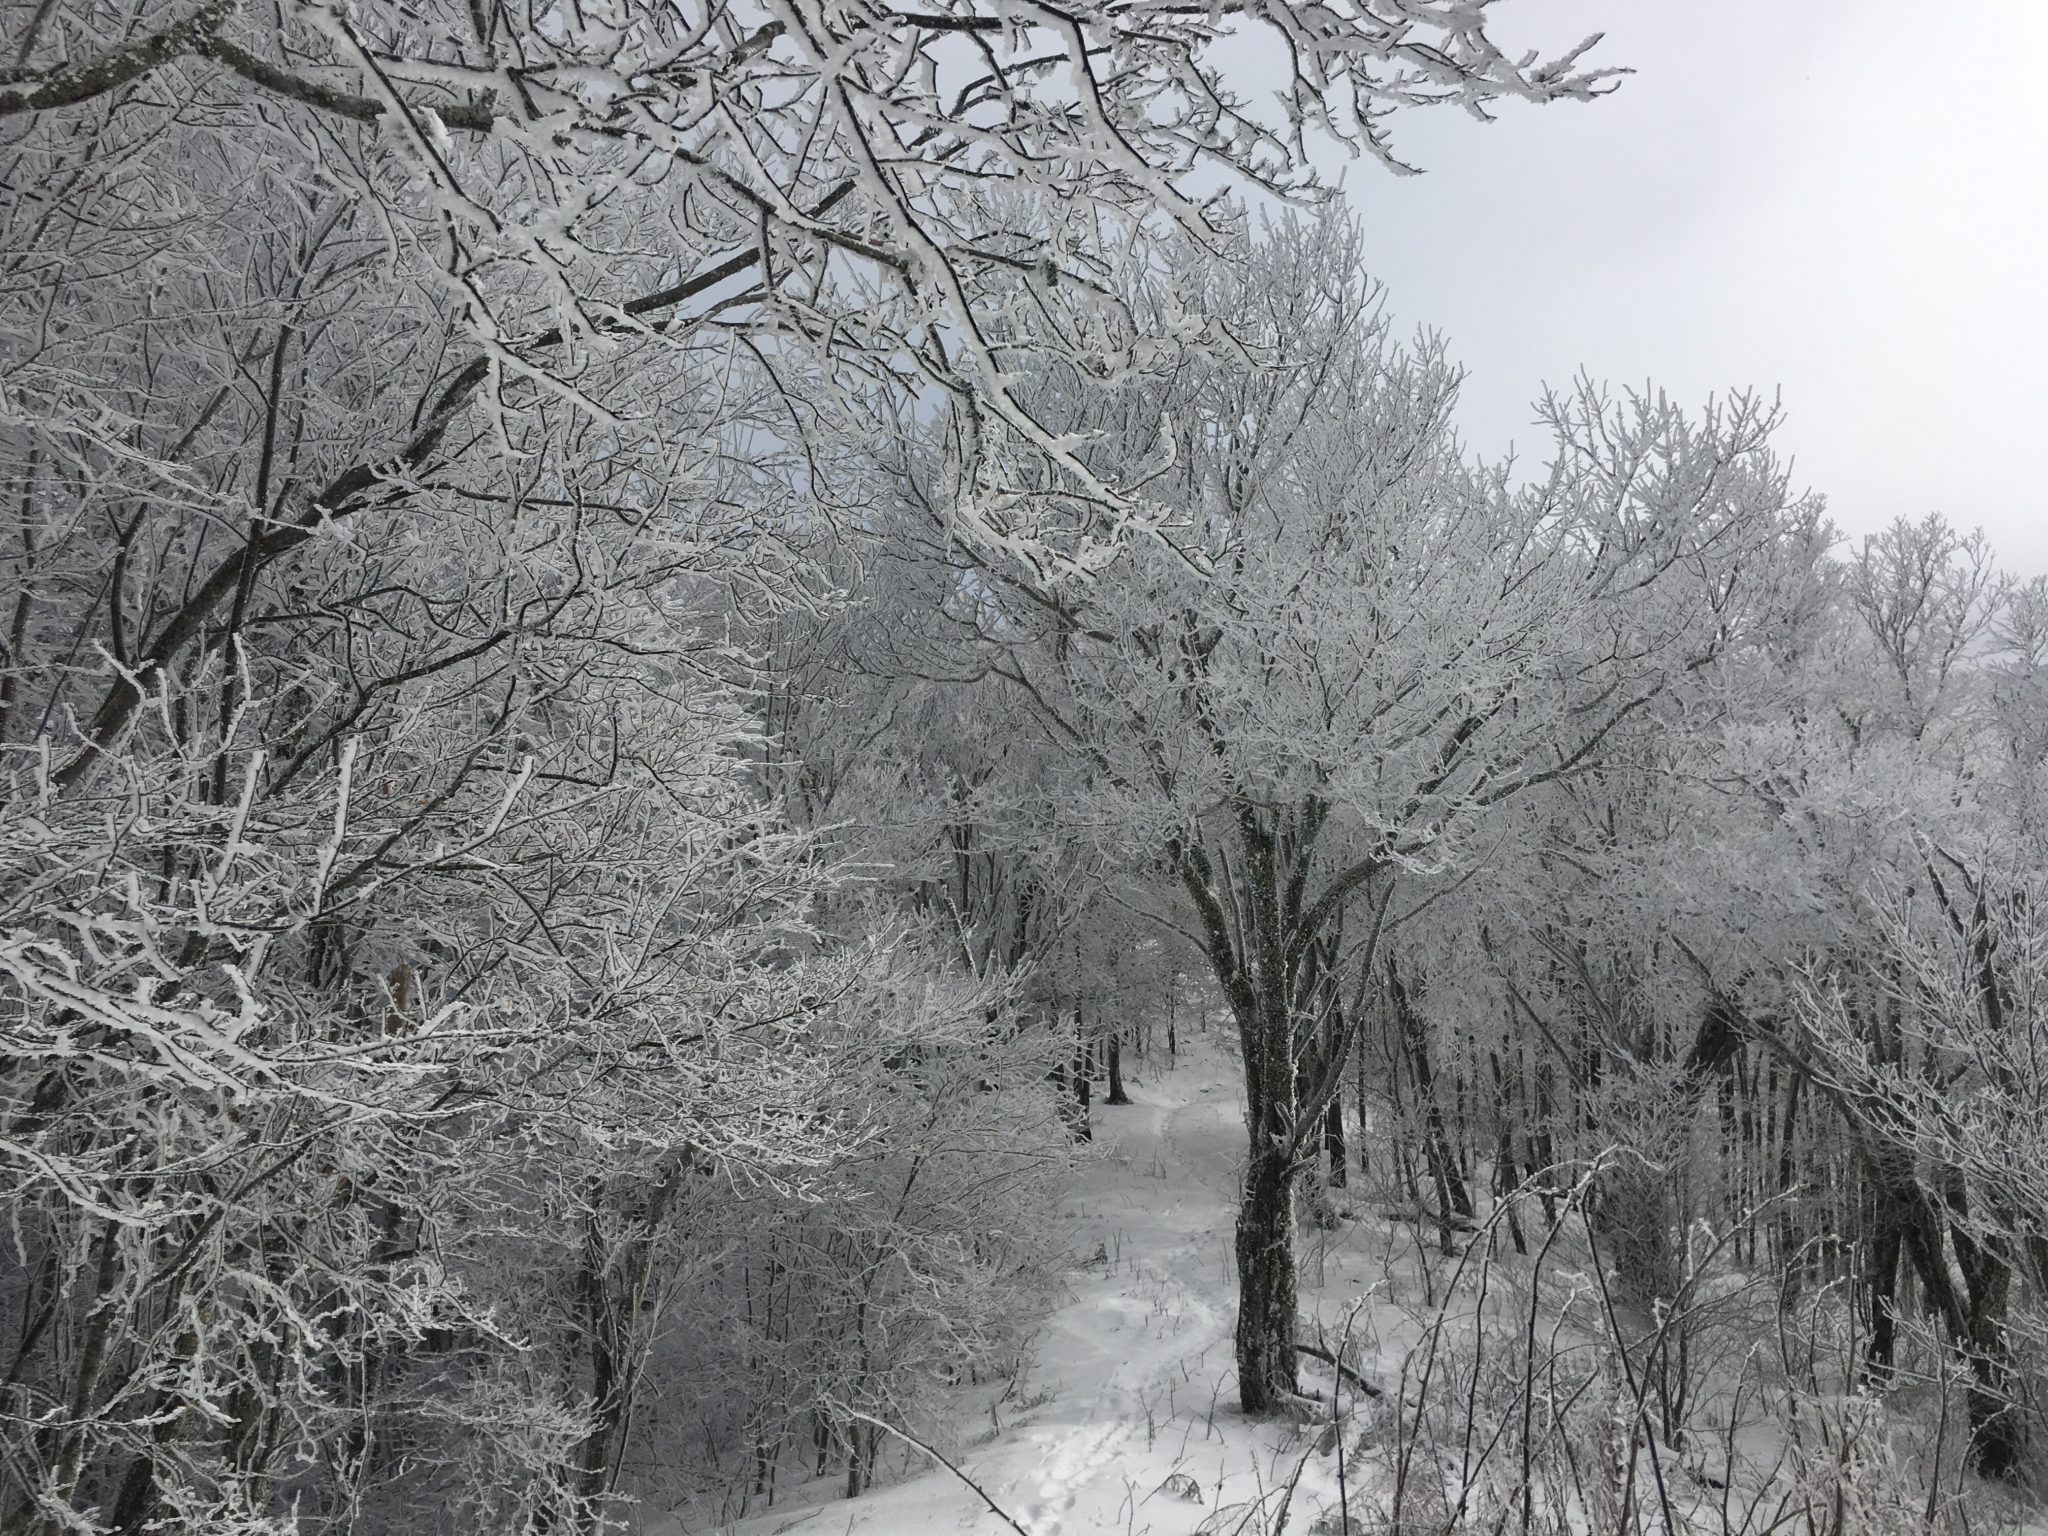 Walking in a winter wonderland